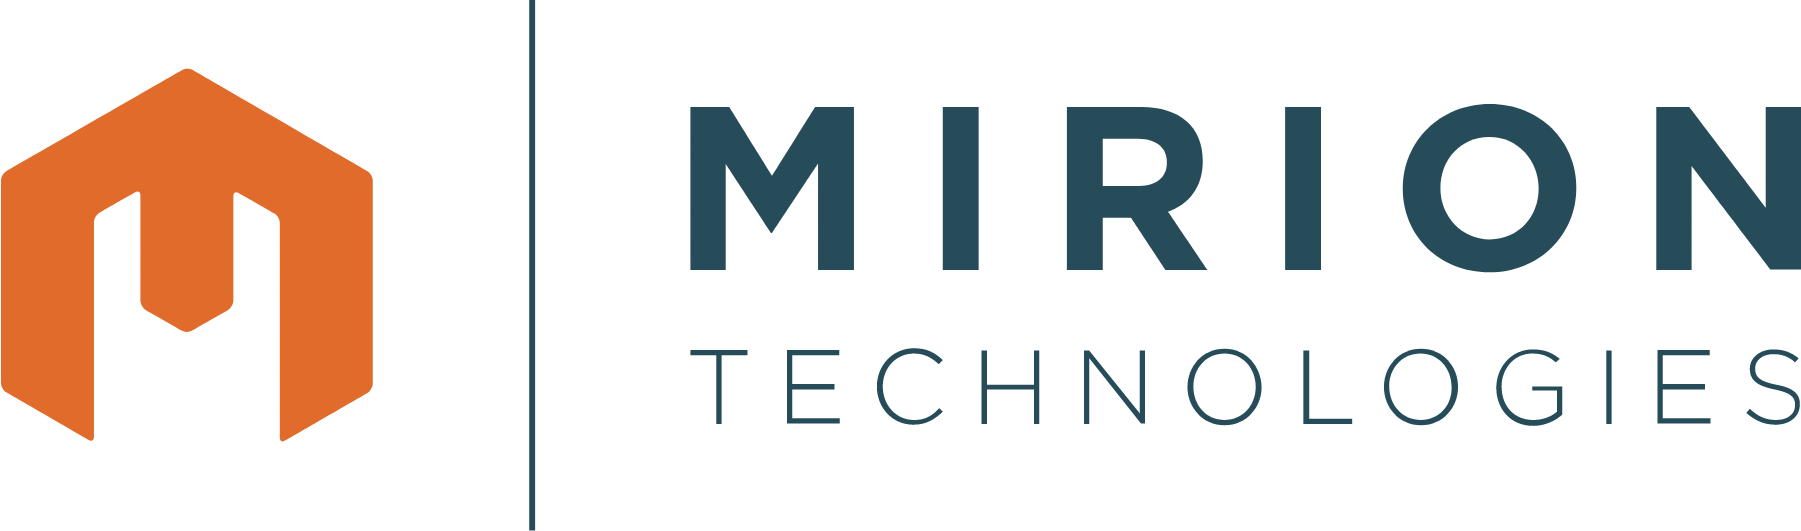 Mirion Technologies logo large (transparent PNG)